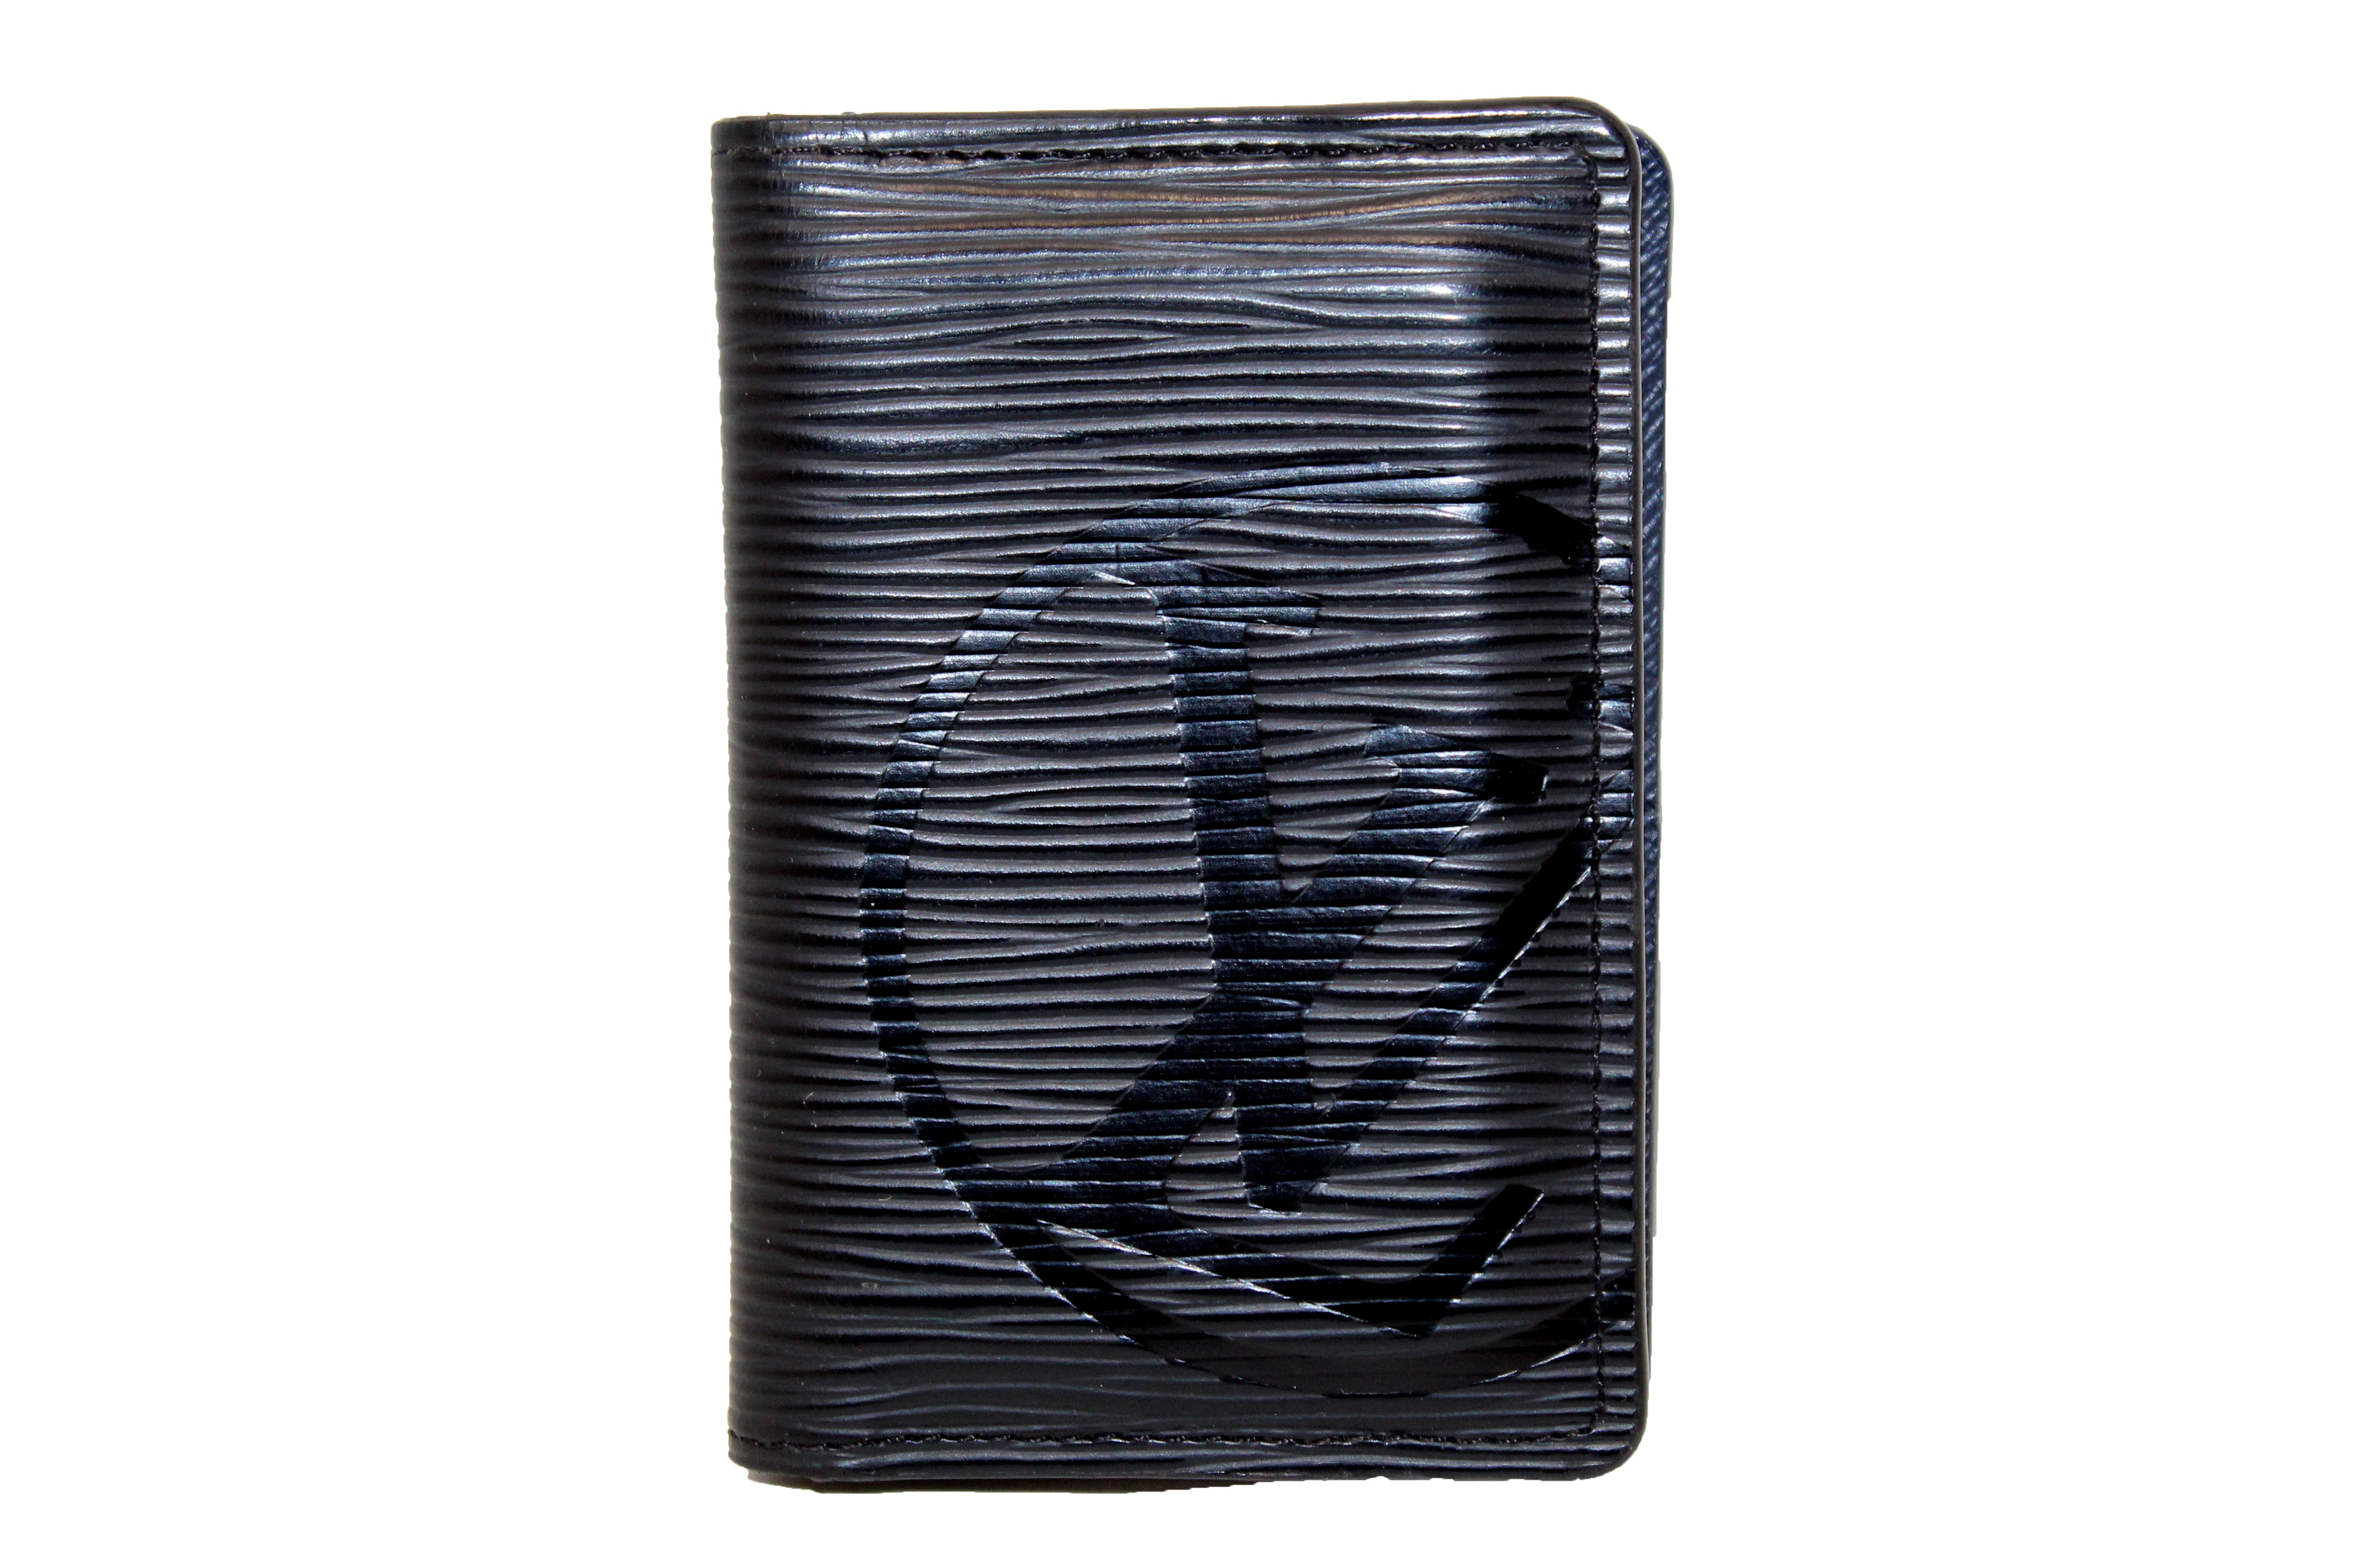 Authentic Louis Vuitton Black/Navy Epi Pocket Organizer Card Holder